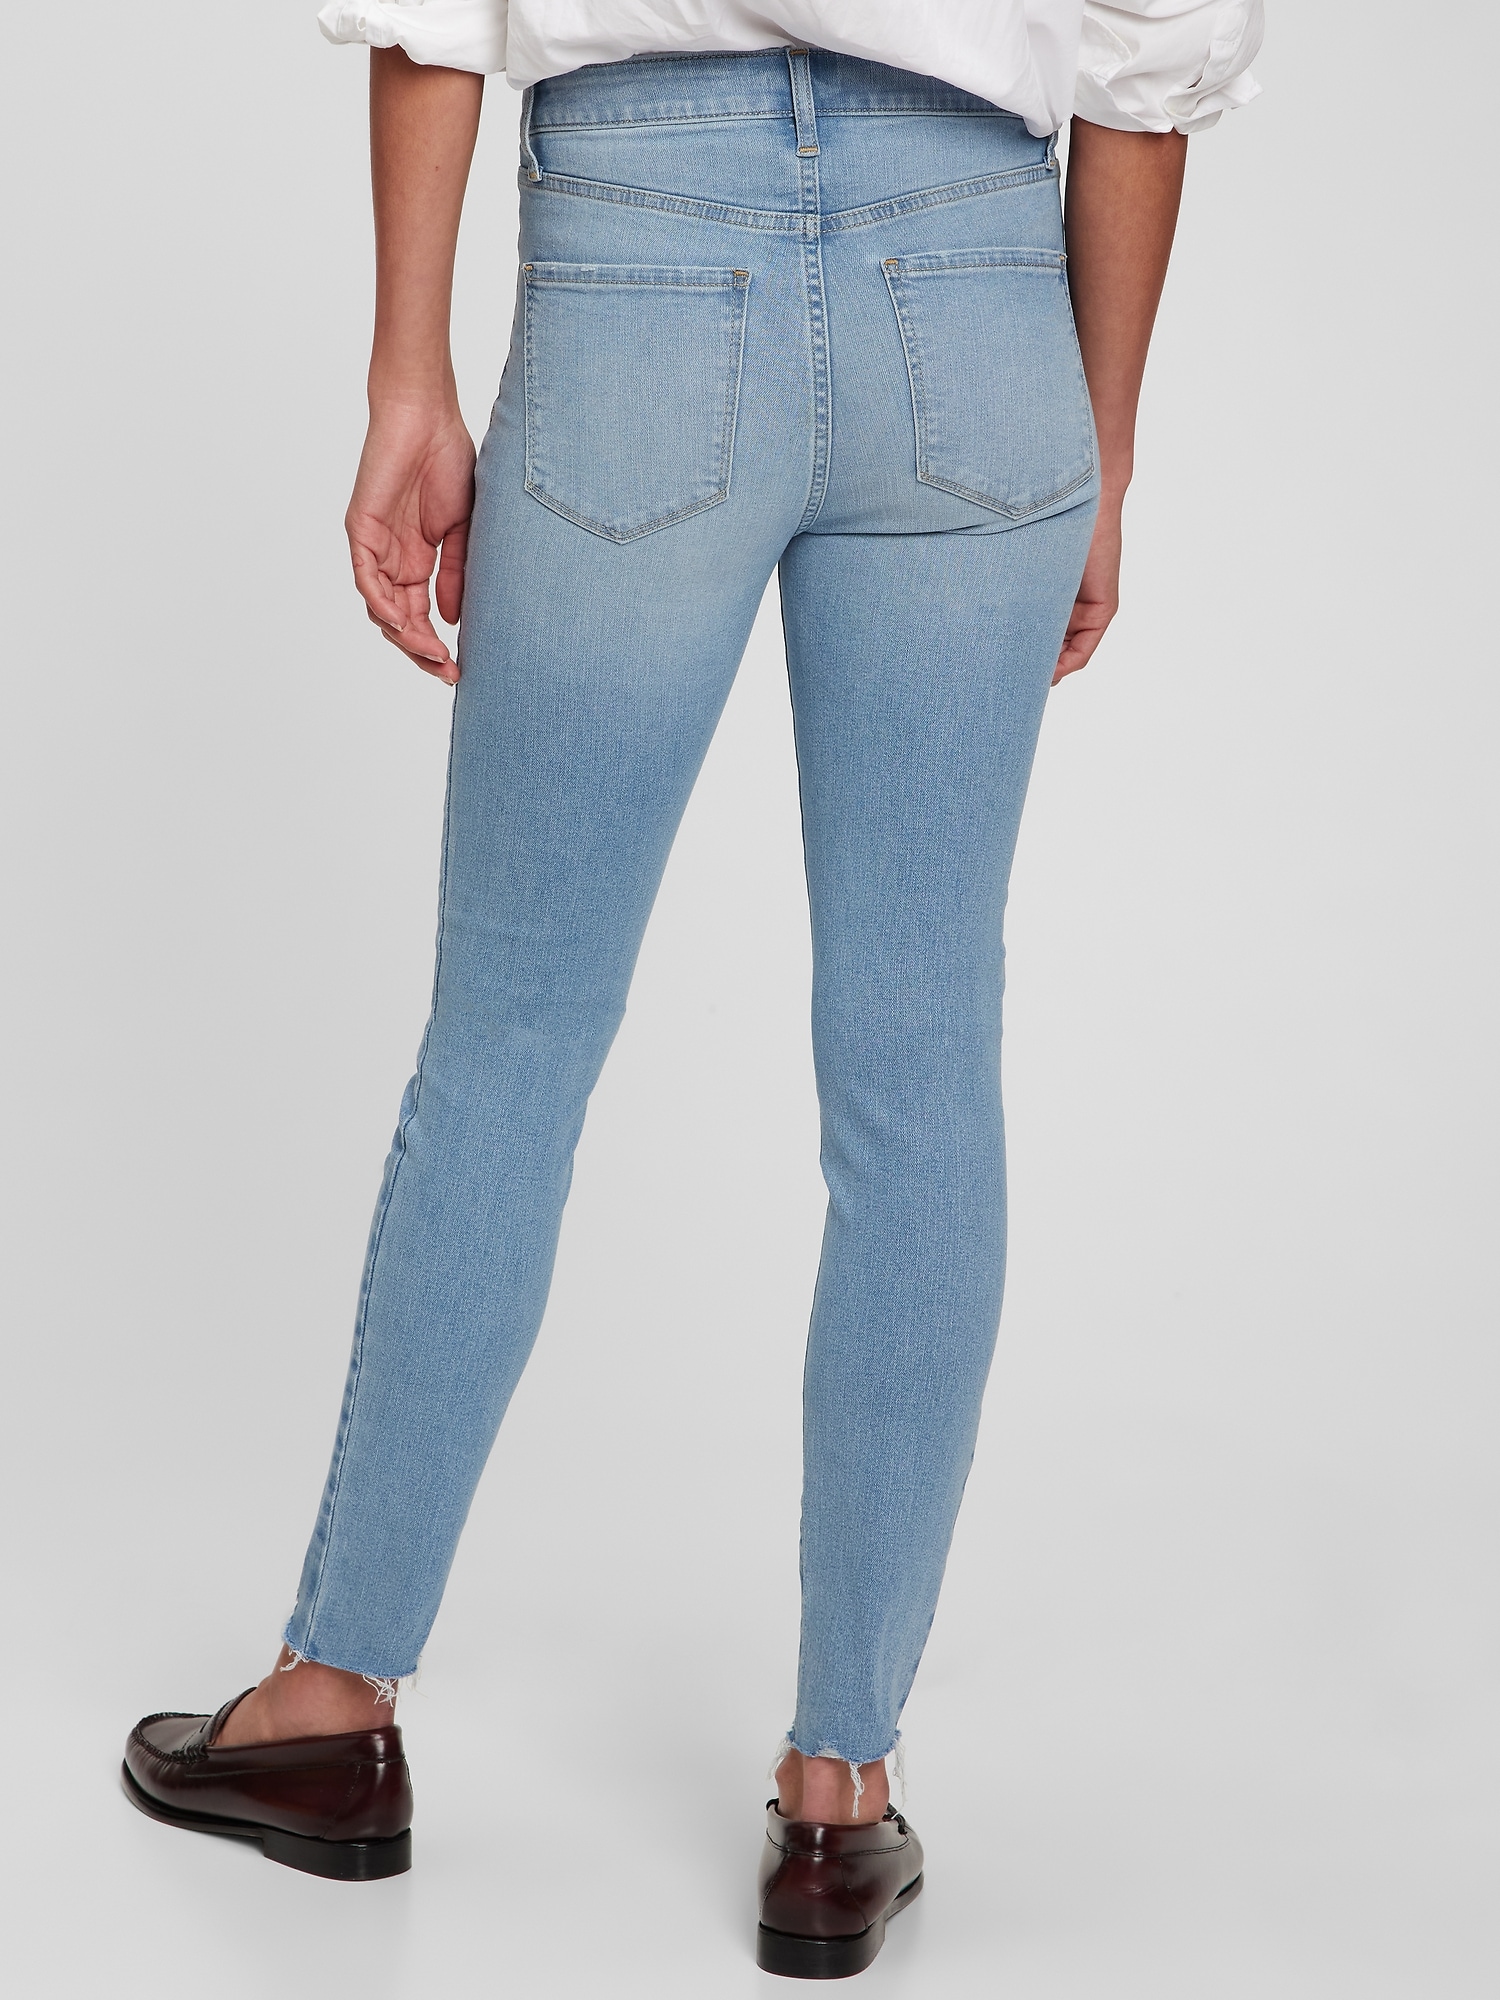 GAP, Jeans, Gap Tall Jeggings Size 24